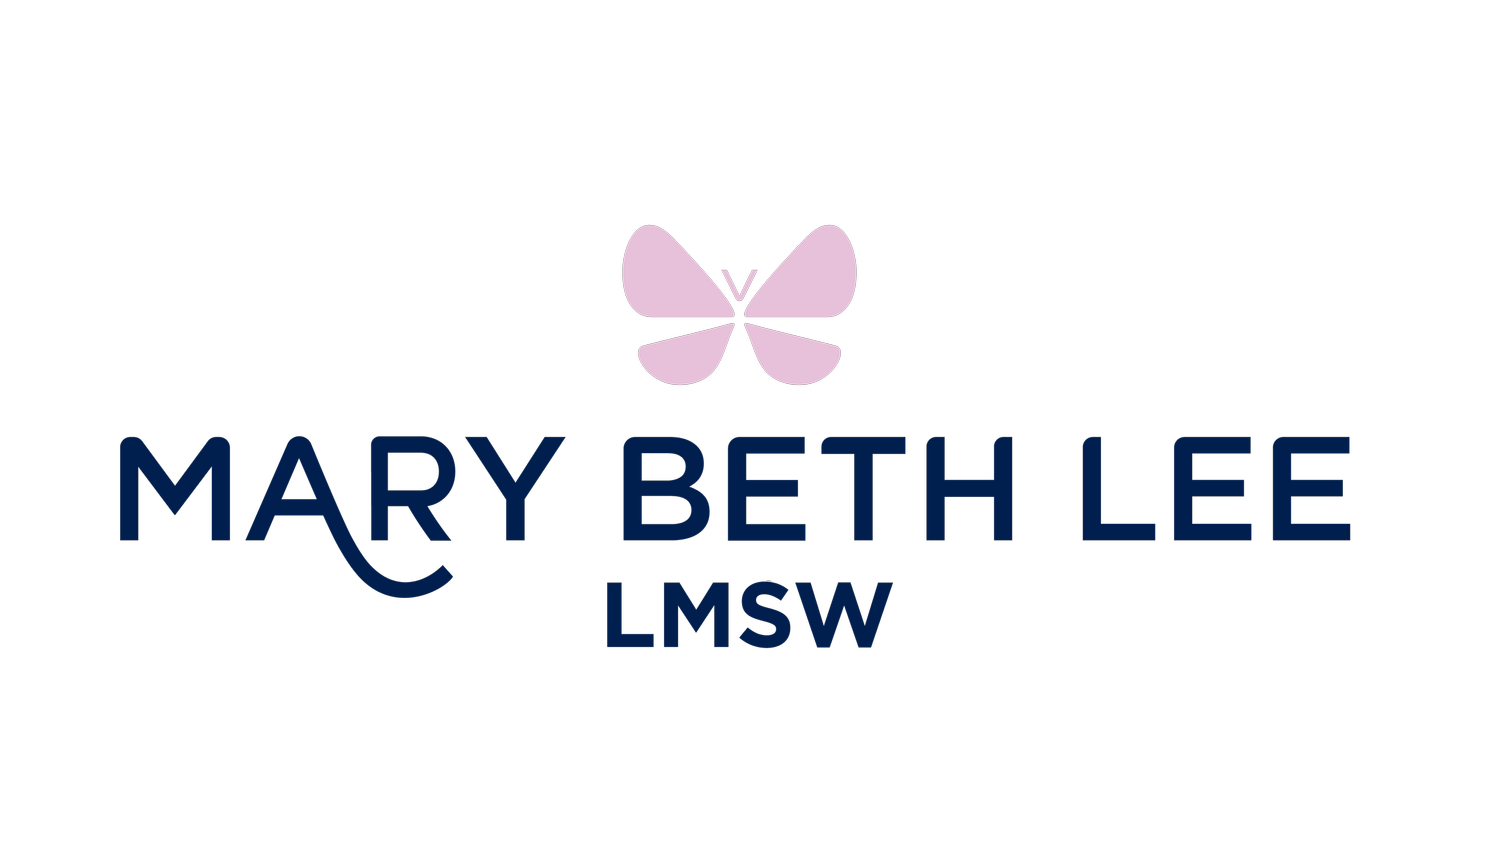 Mary Beth Lee